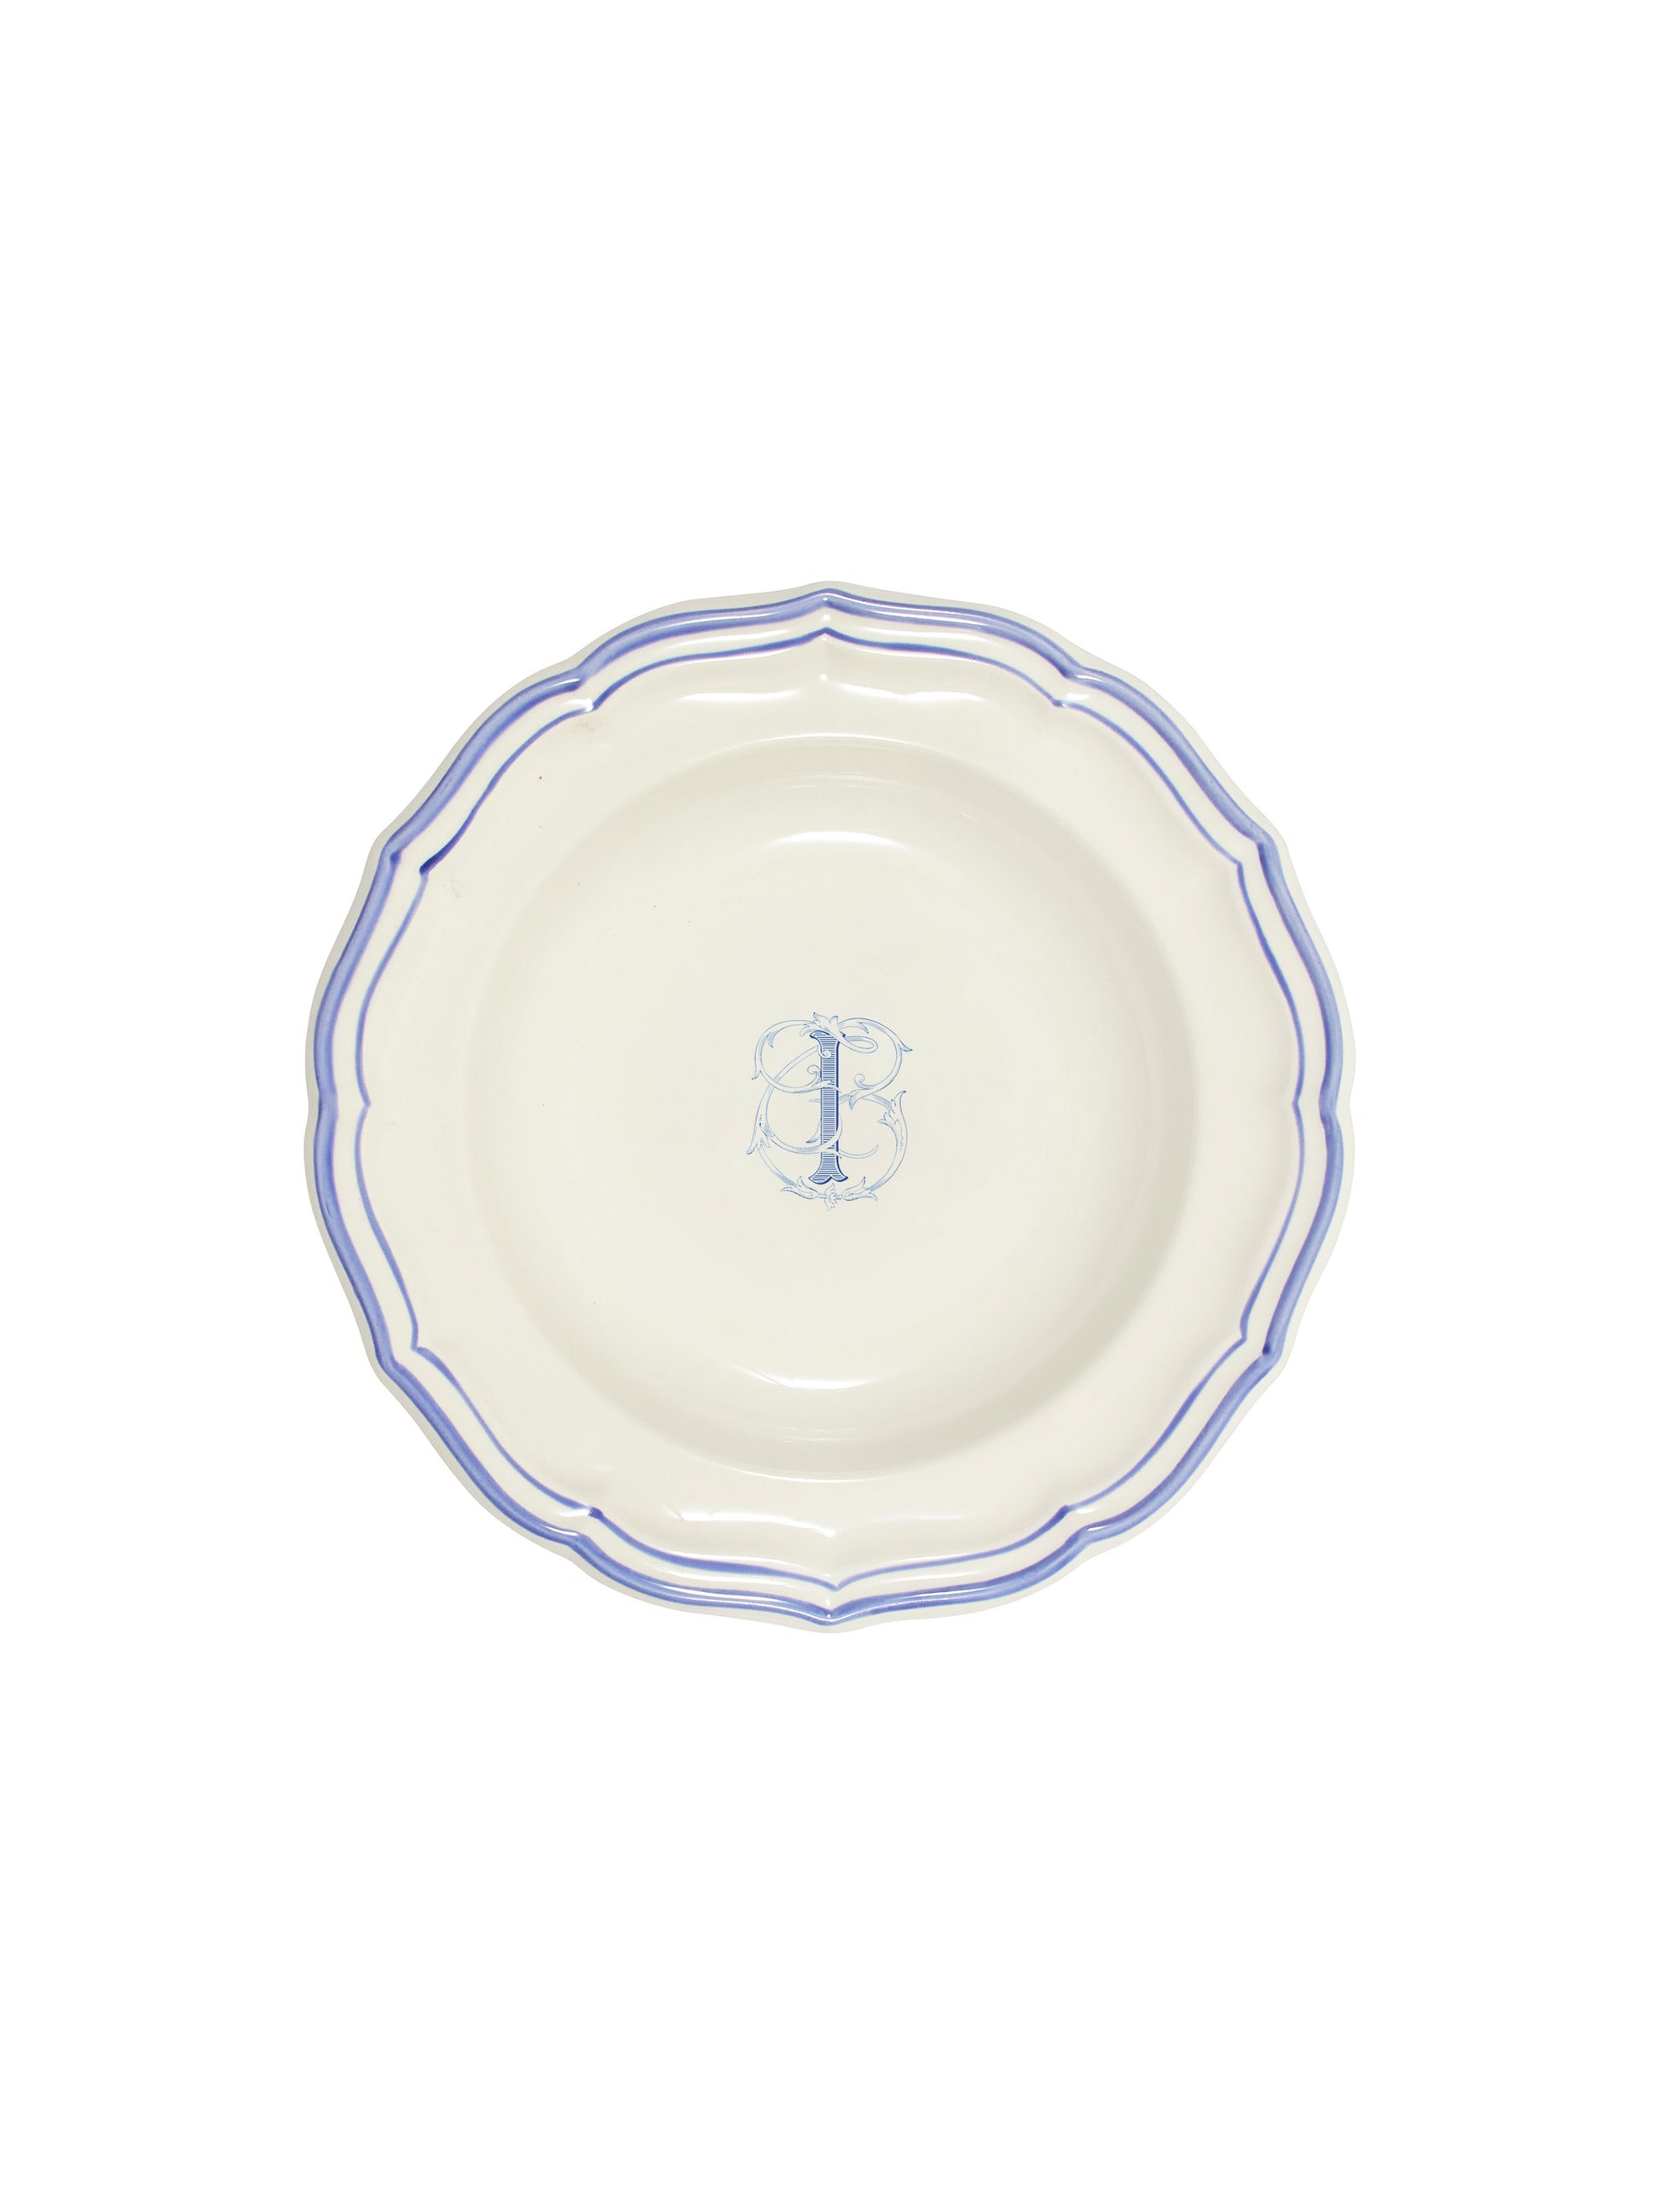 Gien Filet Bleu Monogram Soup Plate I Weston Table